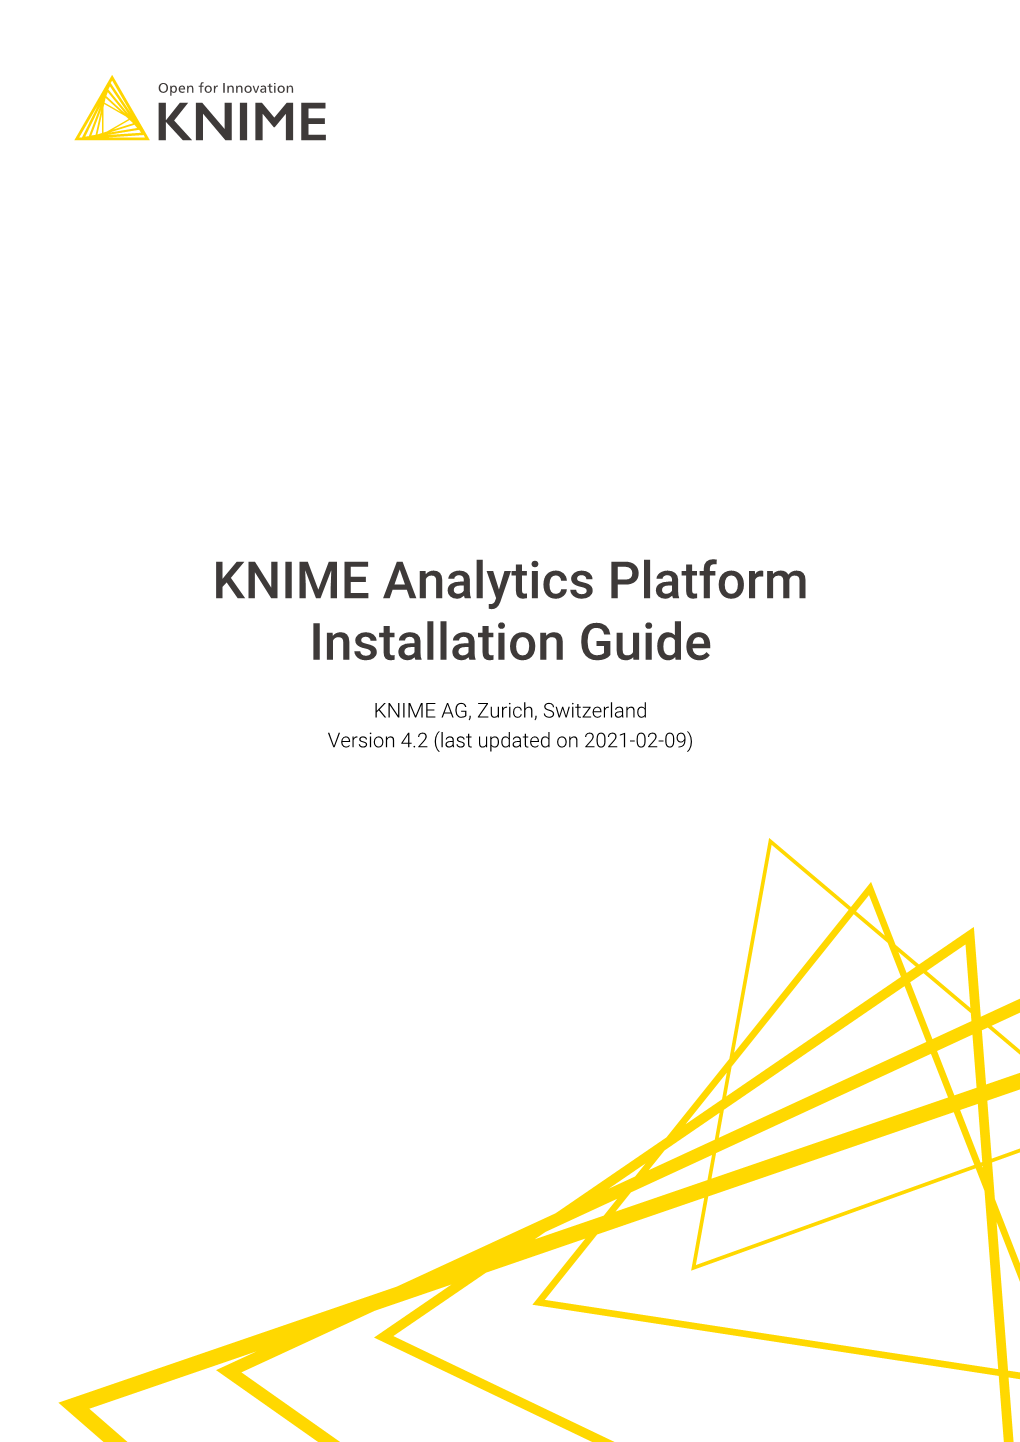 KNIME Analytics Platform Installation Guide